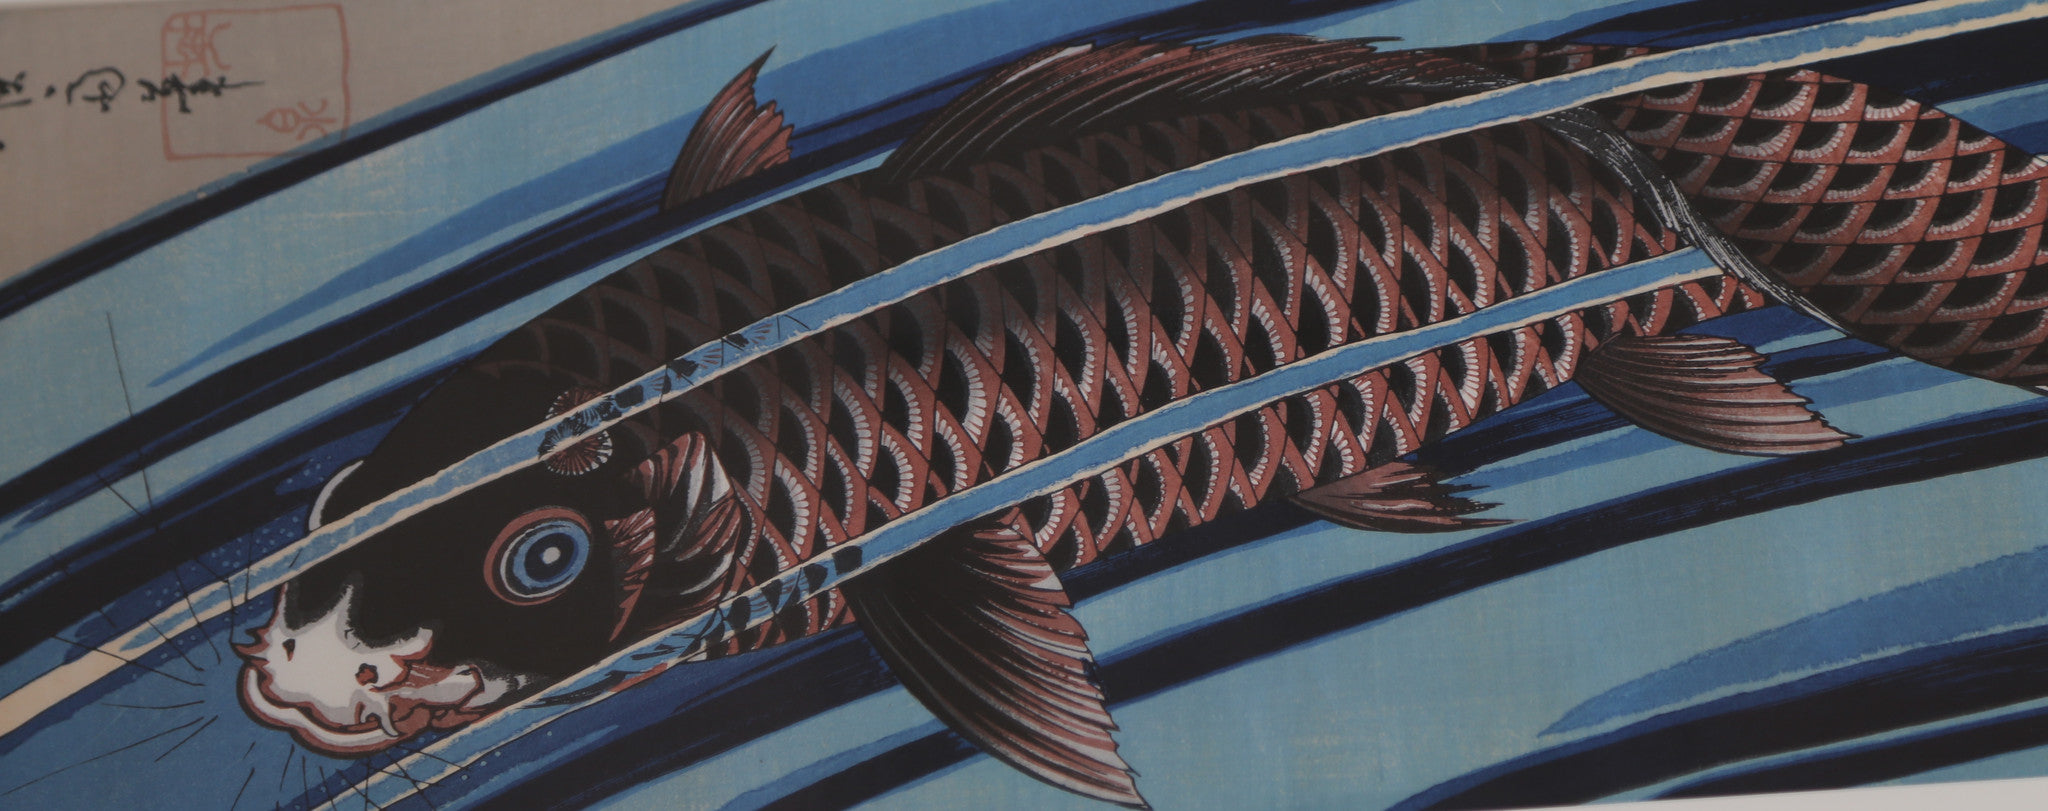 Japanese Carp Painting close up